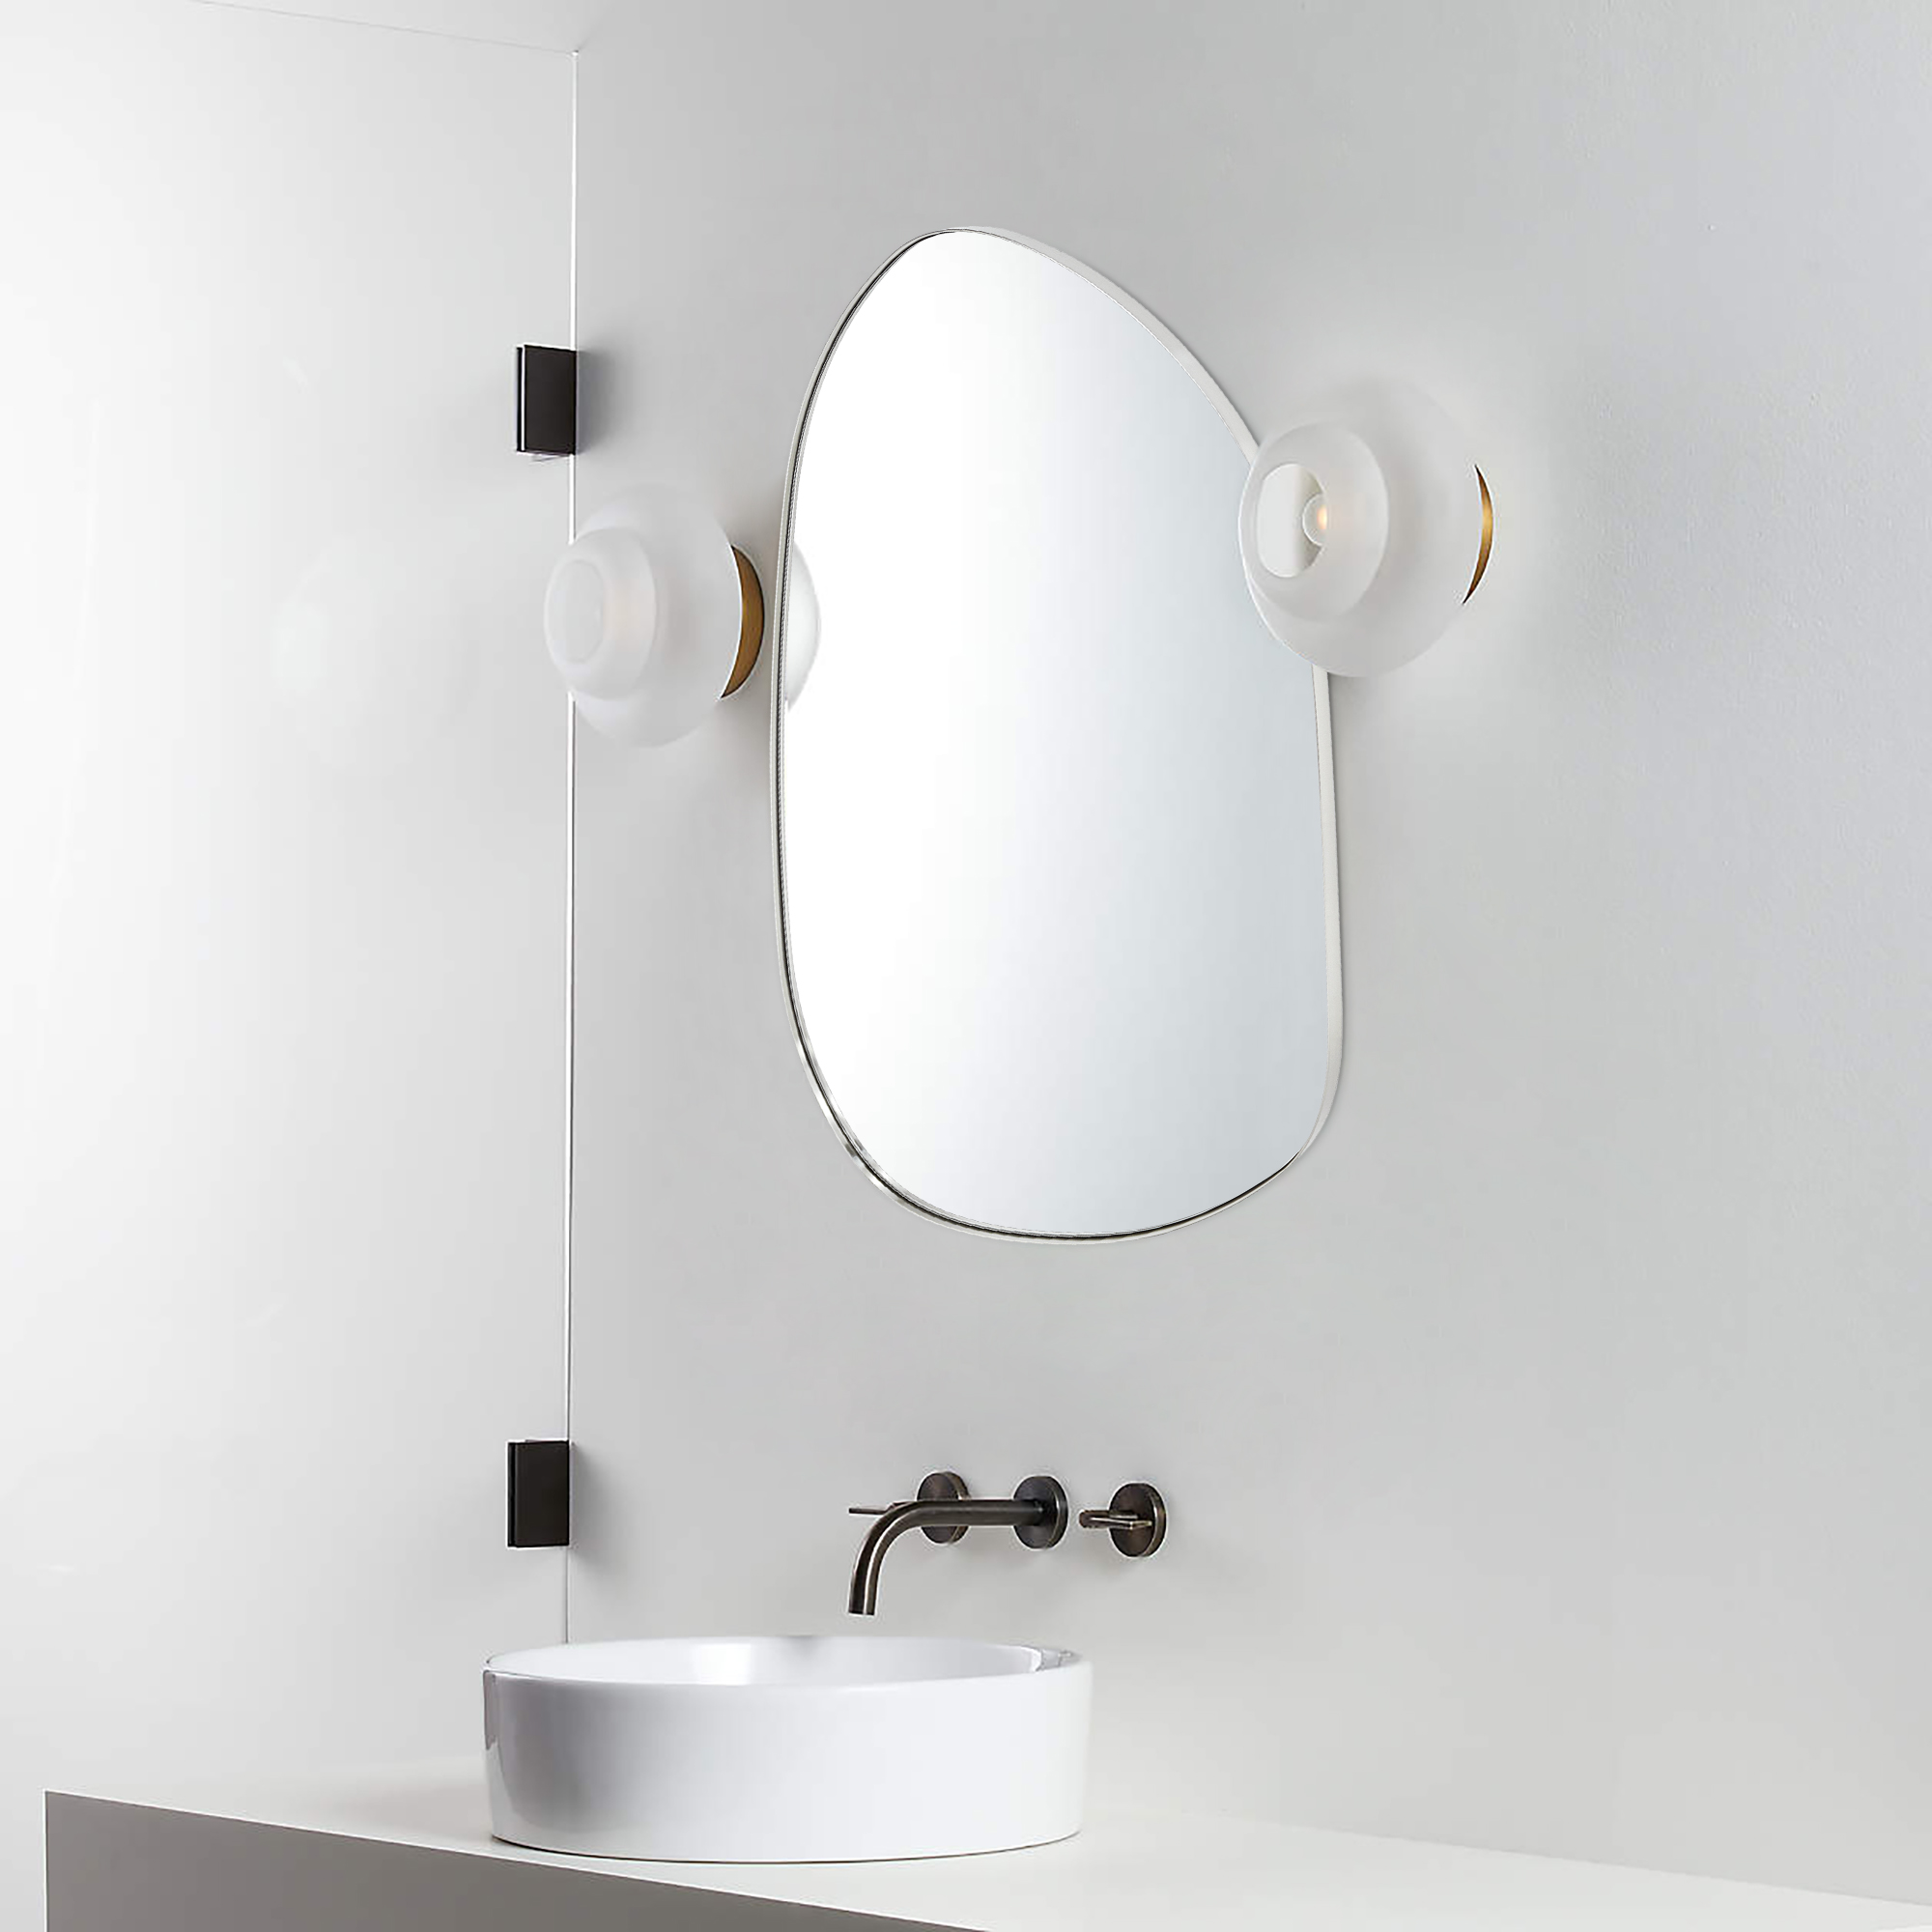 Bertlinde asymmetrical wall mirror irregular shaped mirror for living room, bathroom or entry-30x22-Chrome